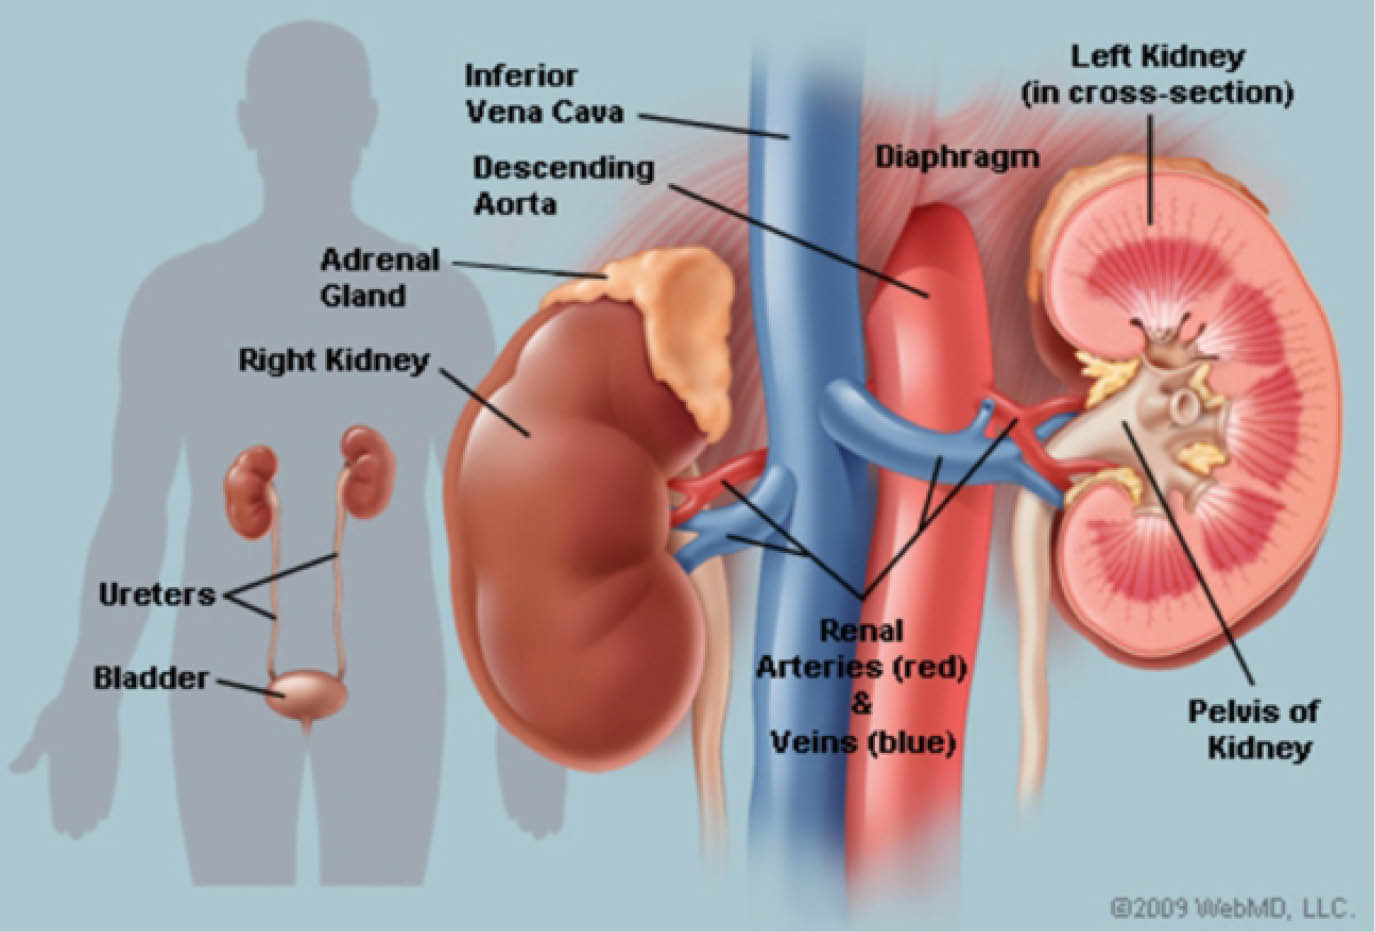 20m Nigerians battle kidney disease, expensive treatment